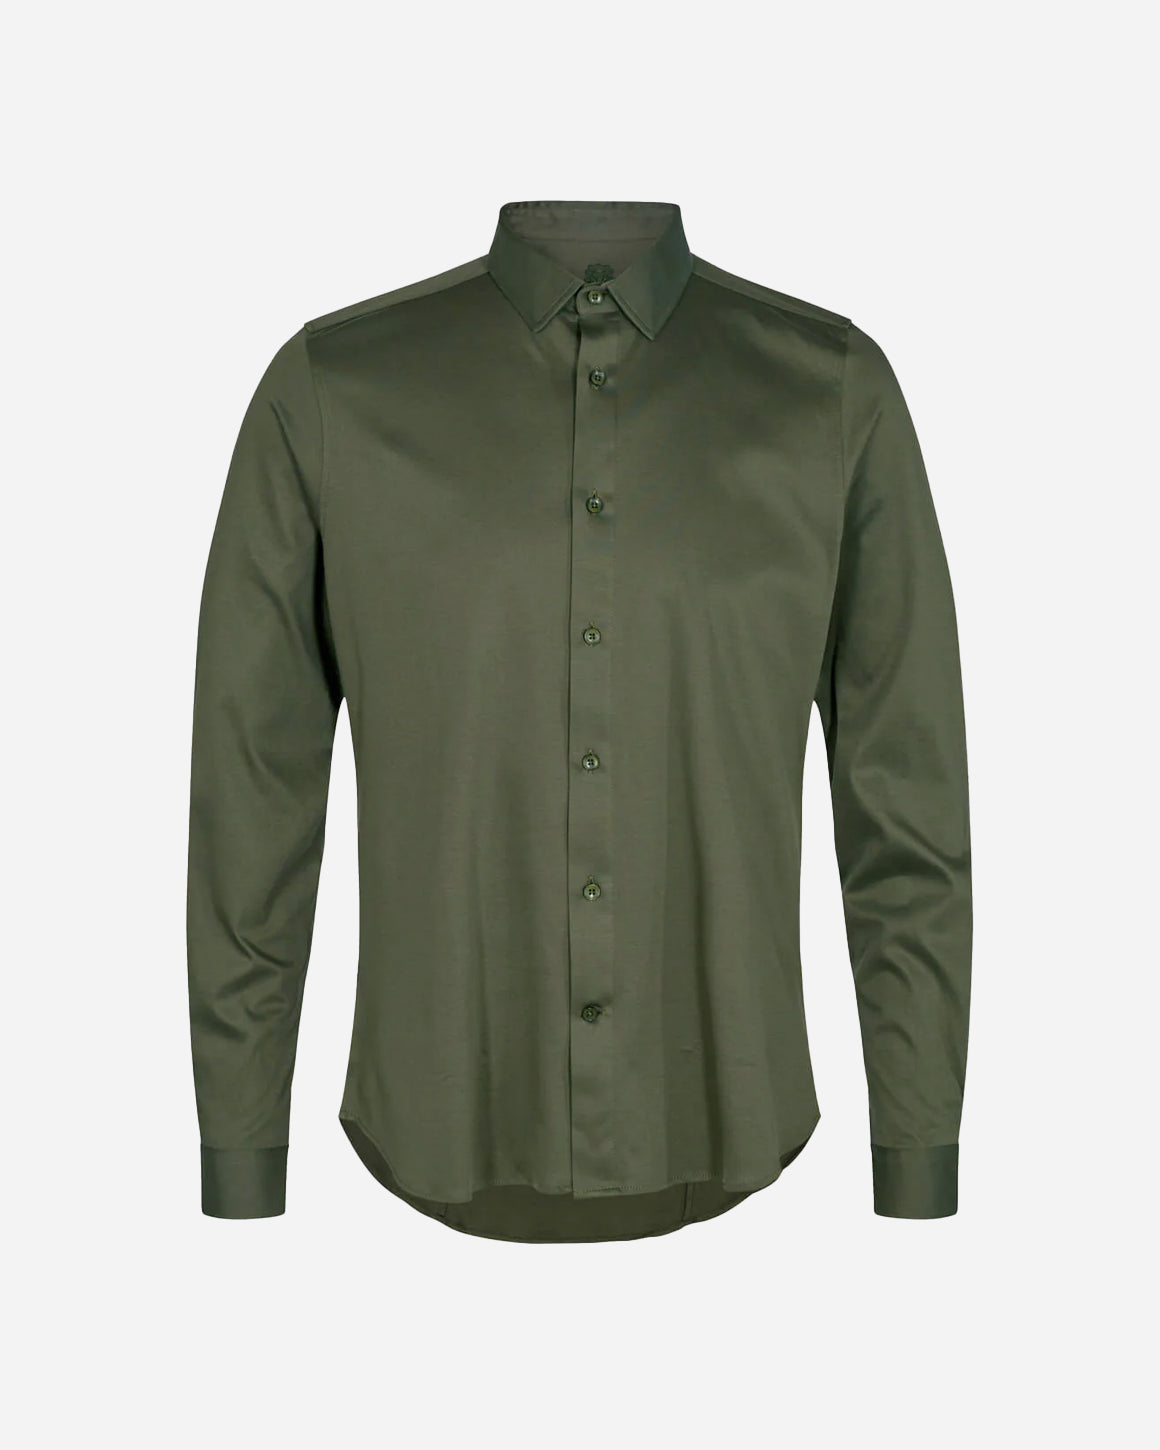 Marco Crunch Jersey Skjorte - Grøn - Mos Mosh Gallery - Kul og Koks